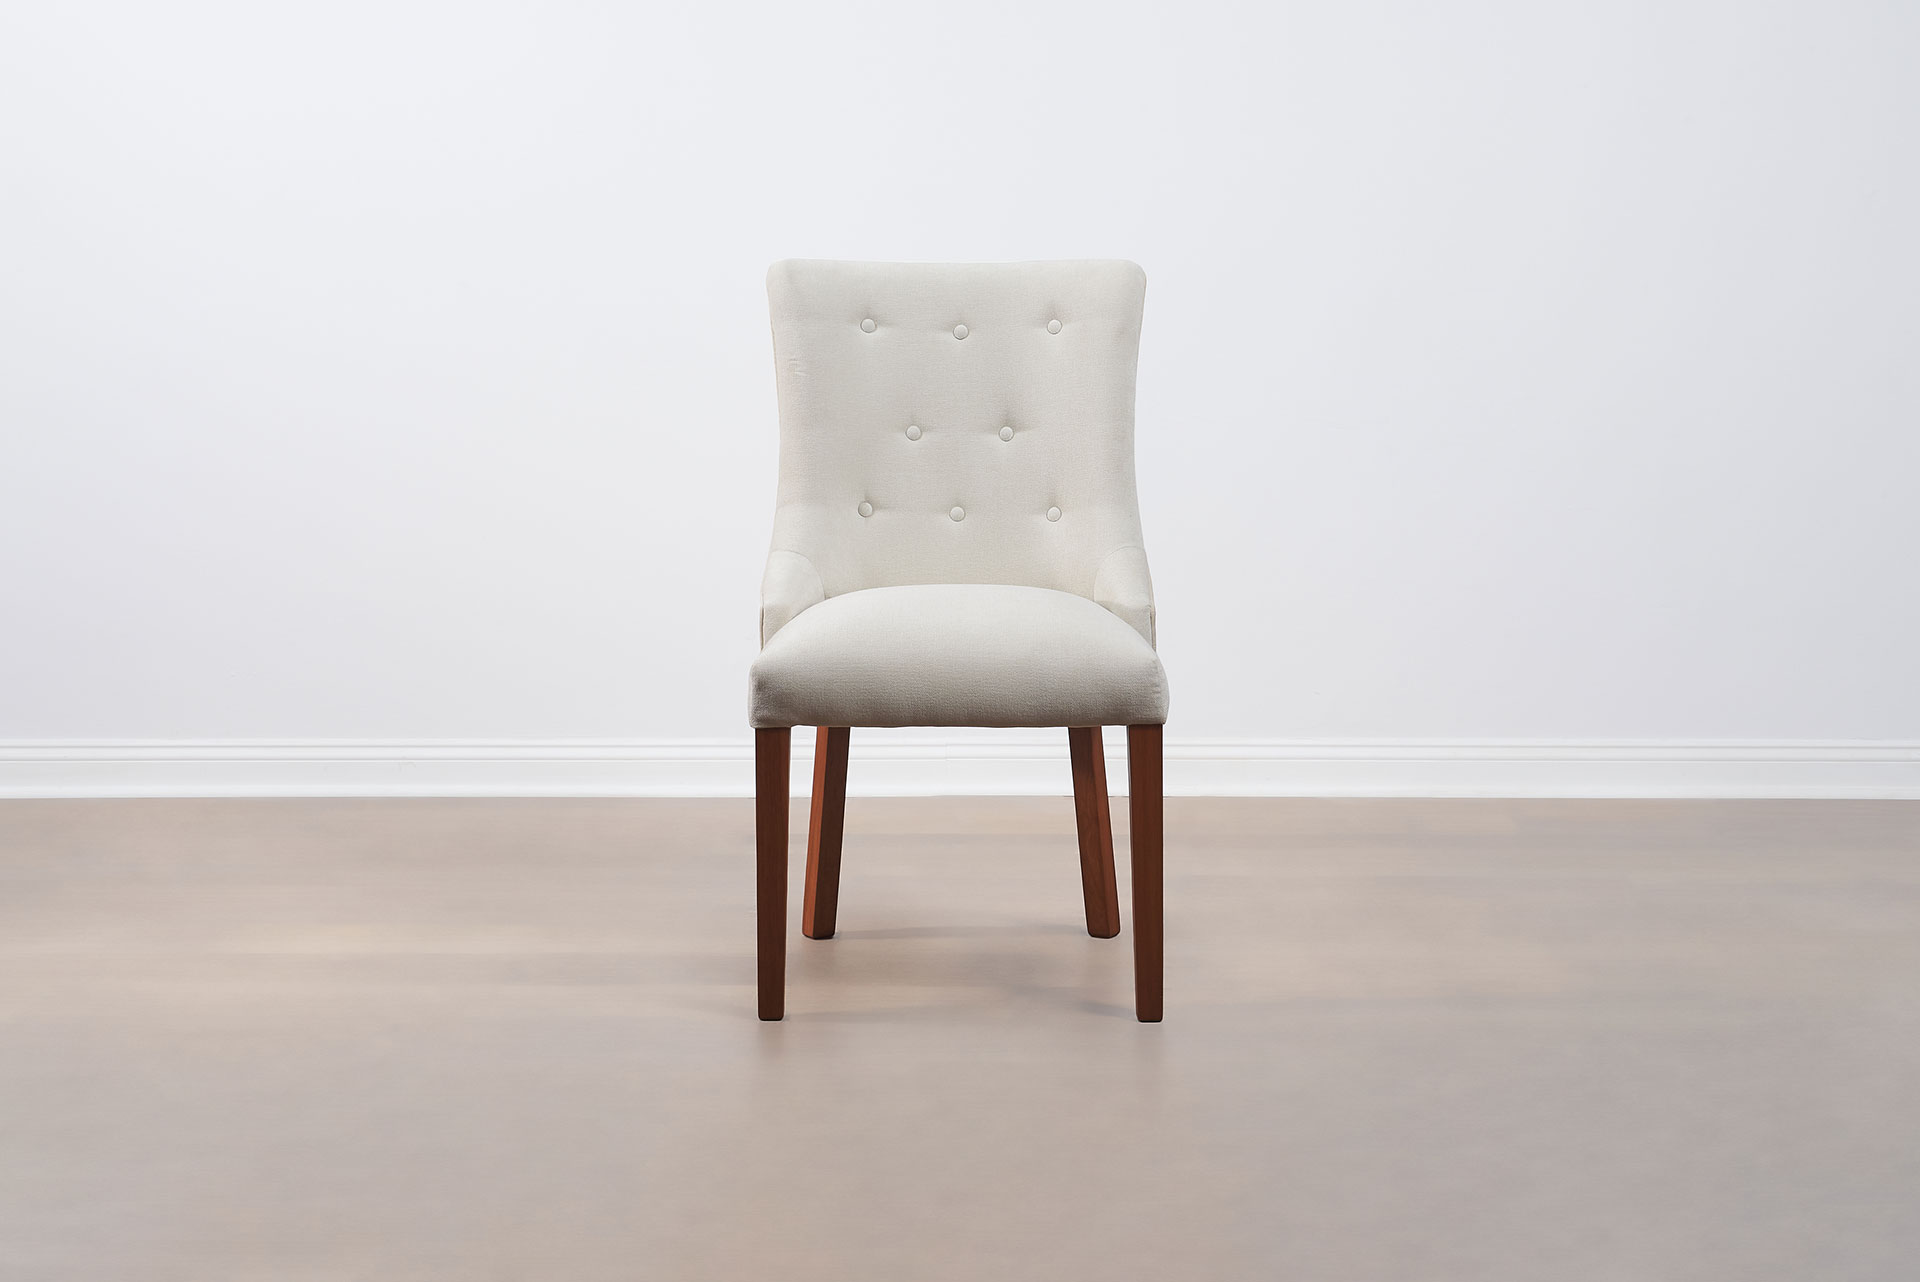 Muebles-Santander_Silla-Nova-100cm_4646_silla_madera_textil